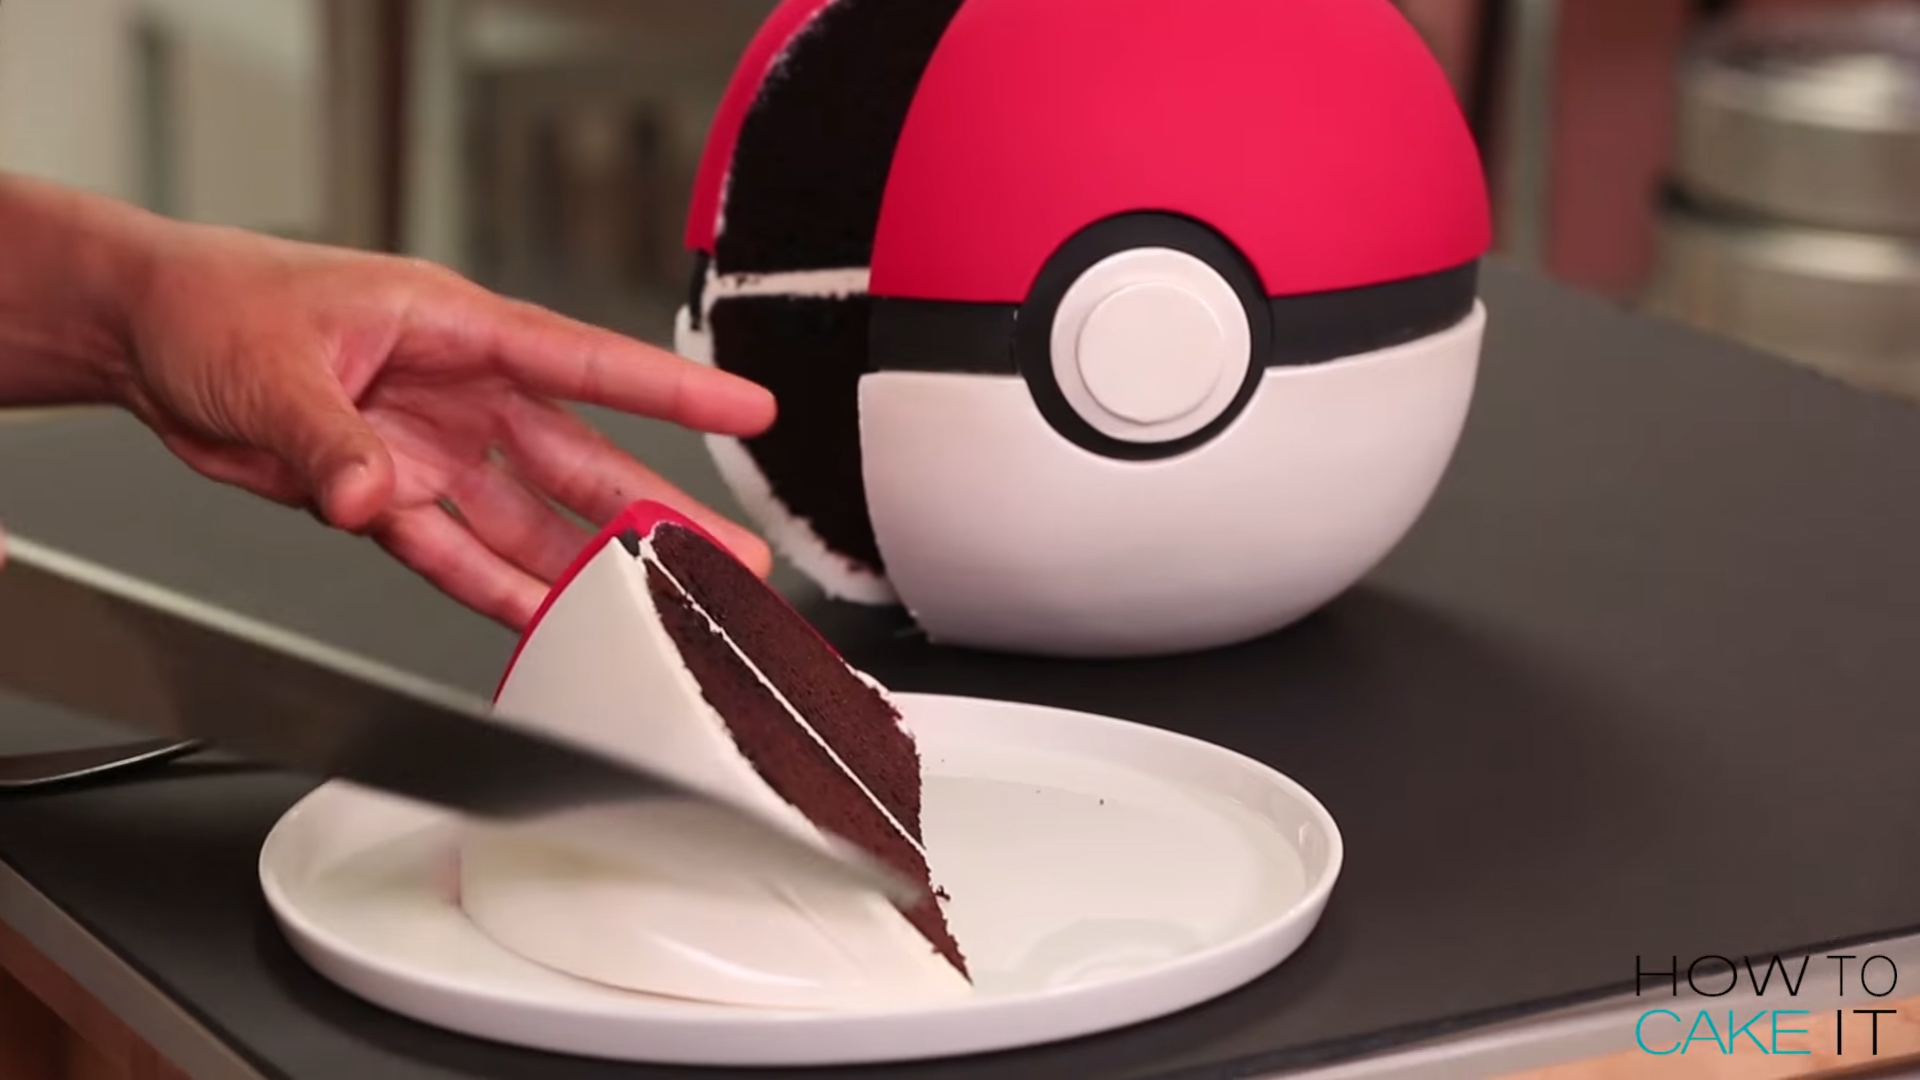 Top 16 Pokemon cake ideas - A Pretty Celebration